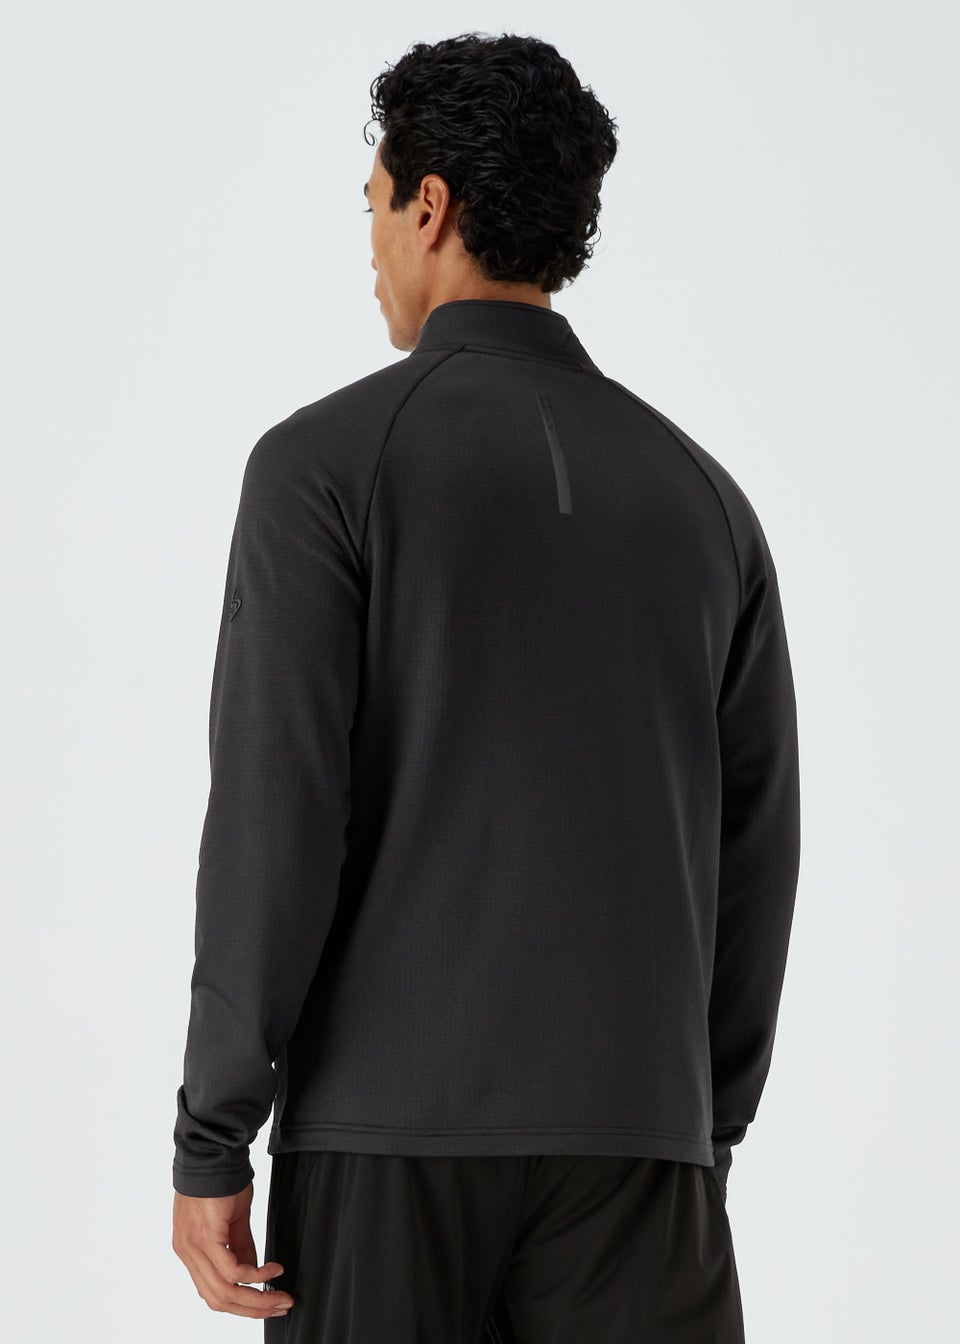 Souluxe Black Hybrid Sports Jacket